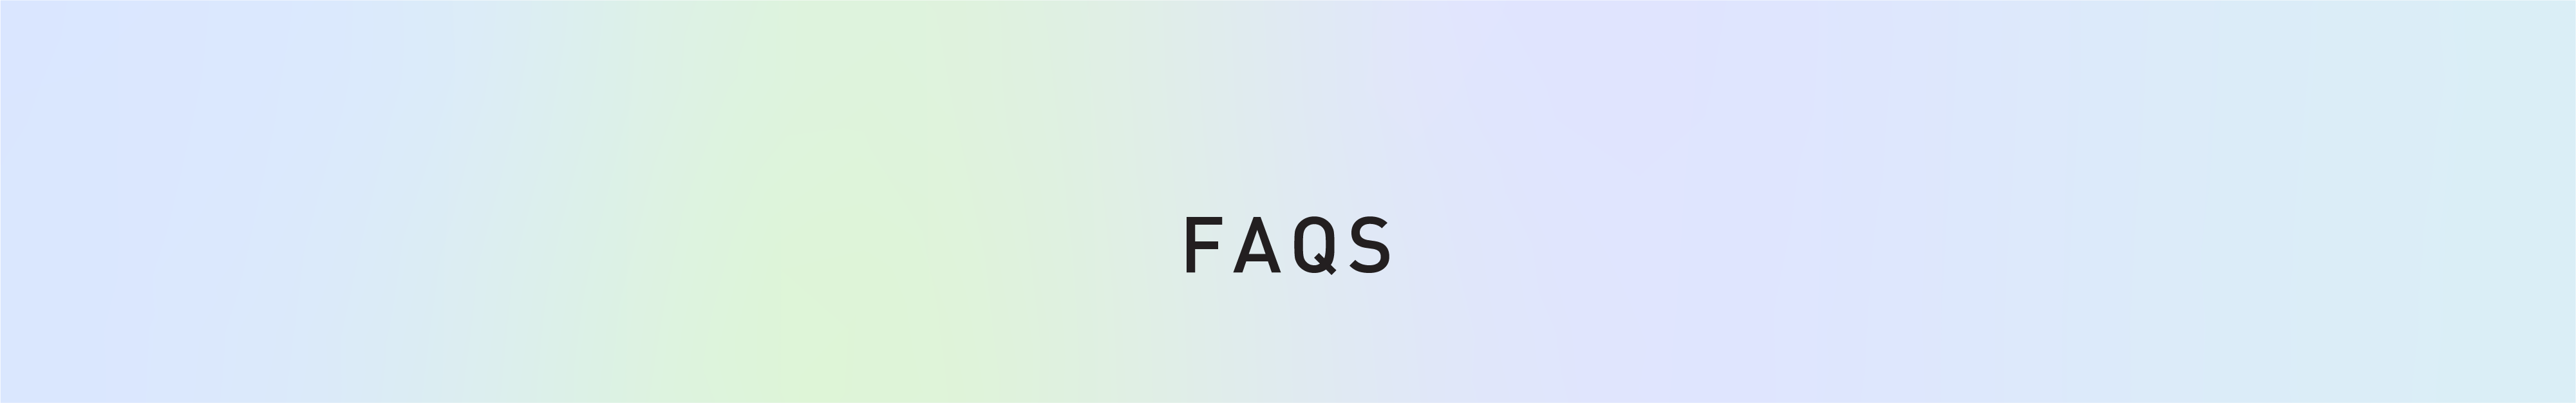 053024 Sub Banners Desktop FAQs